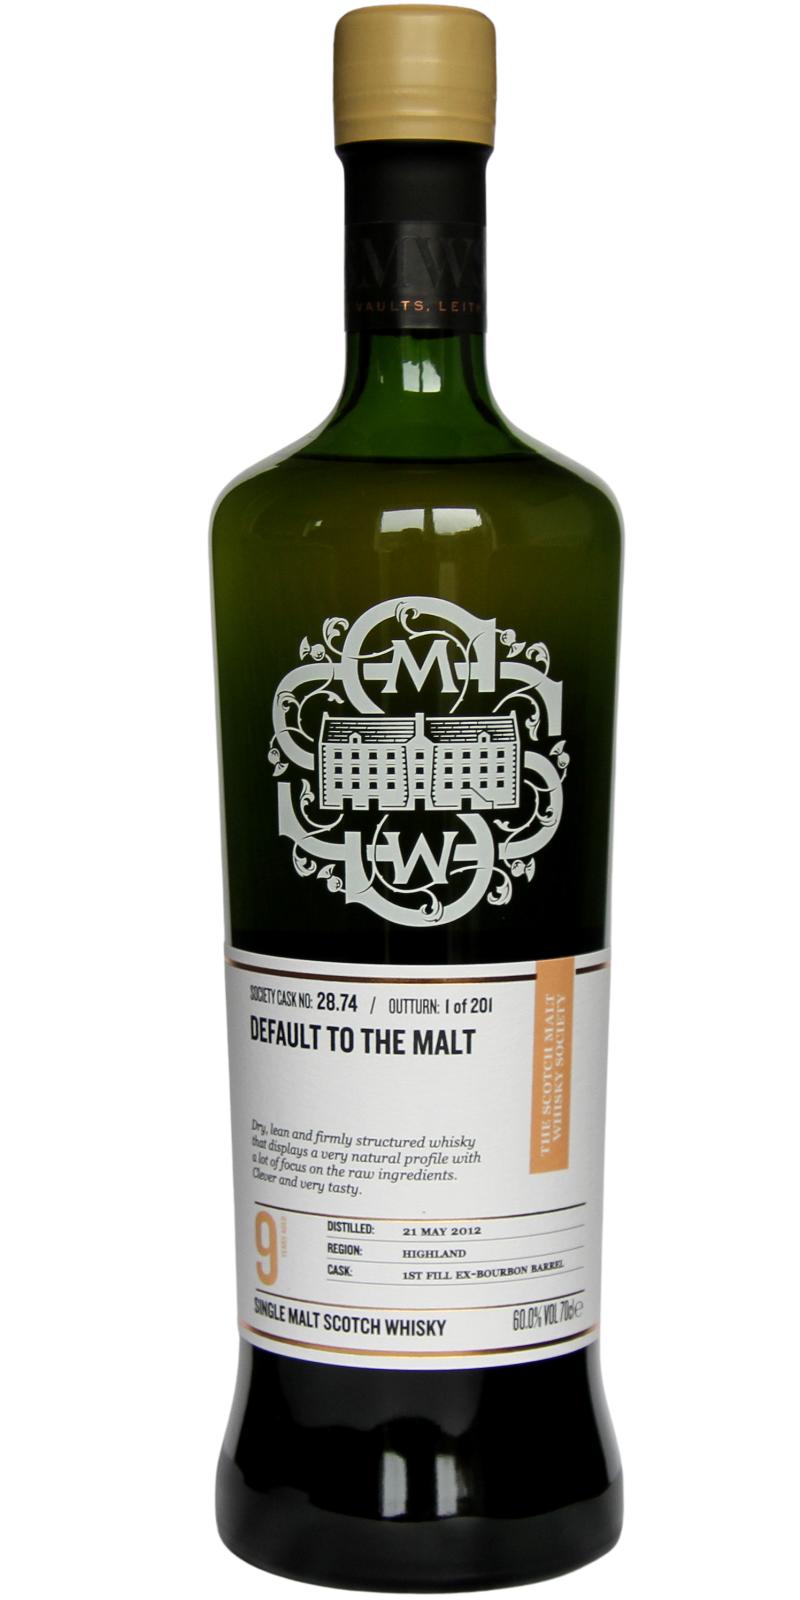 Tullibardine 2012 SMWS 28.74 Default to the malt 1st Fill Bourbon Barrel 60% 700ml